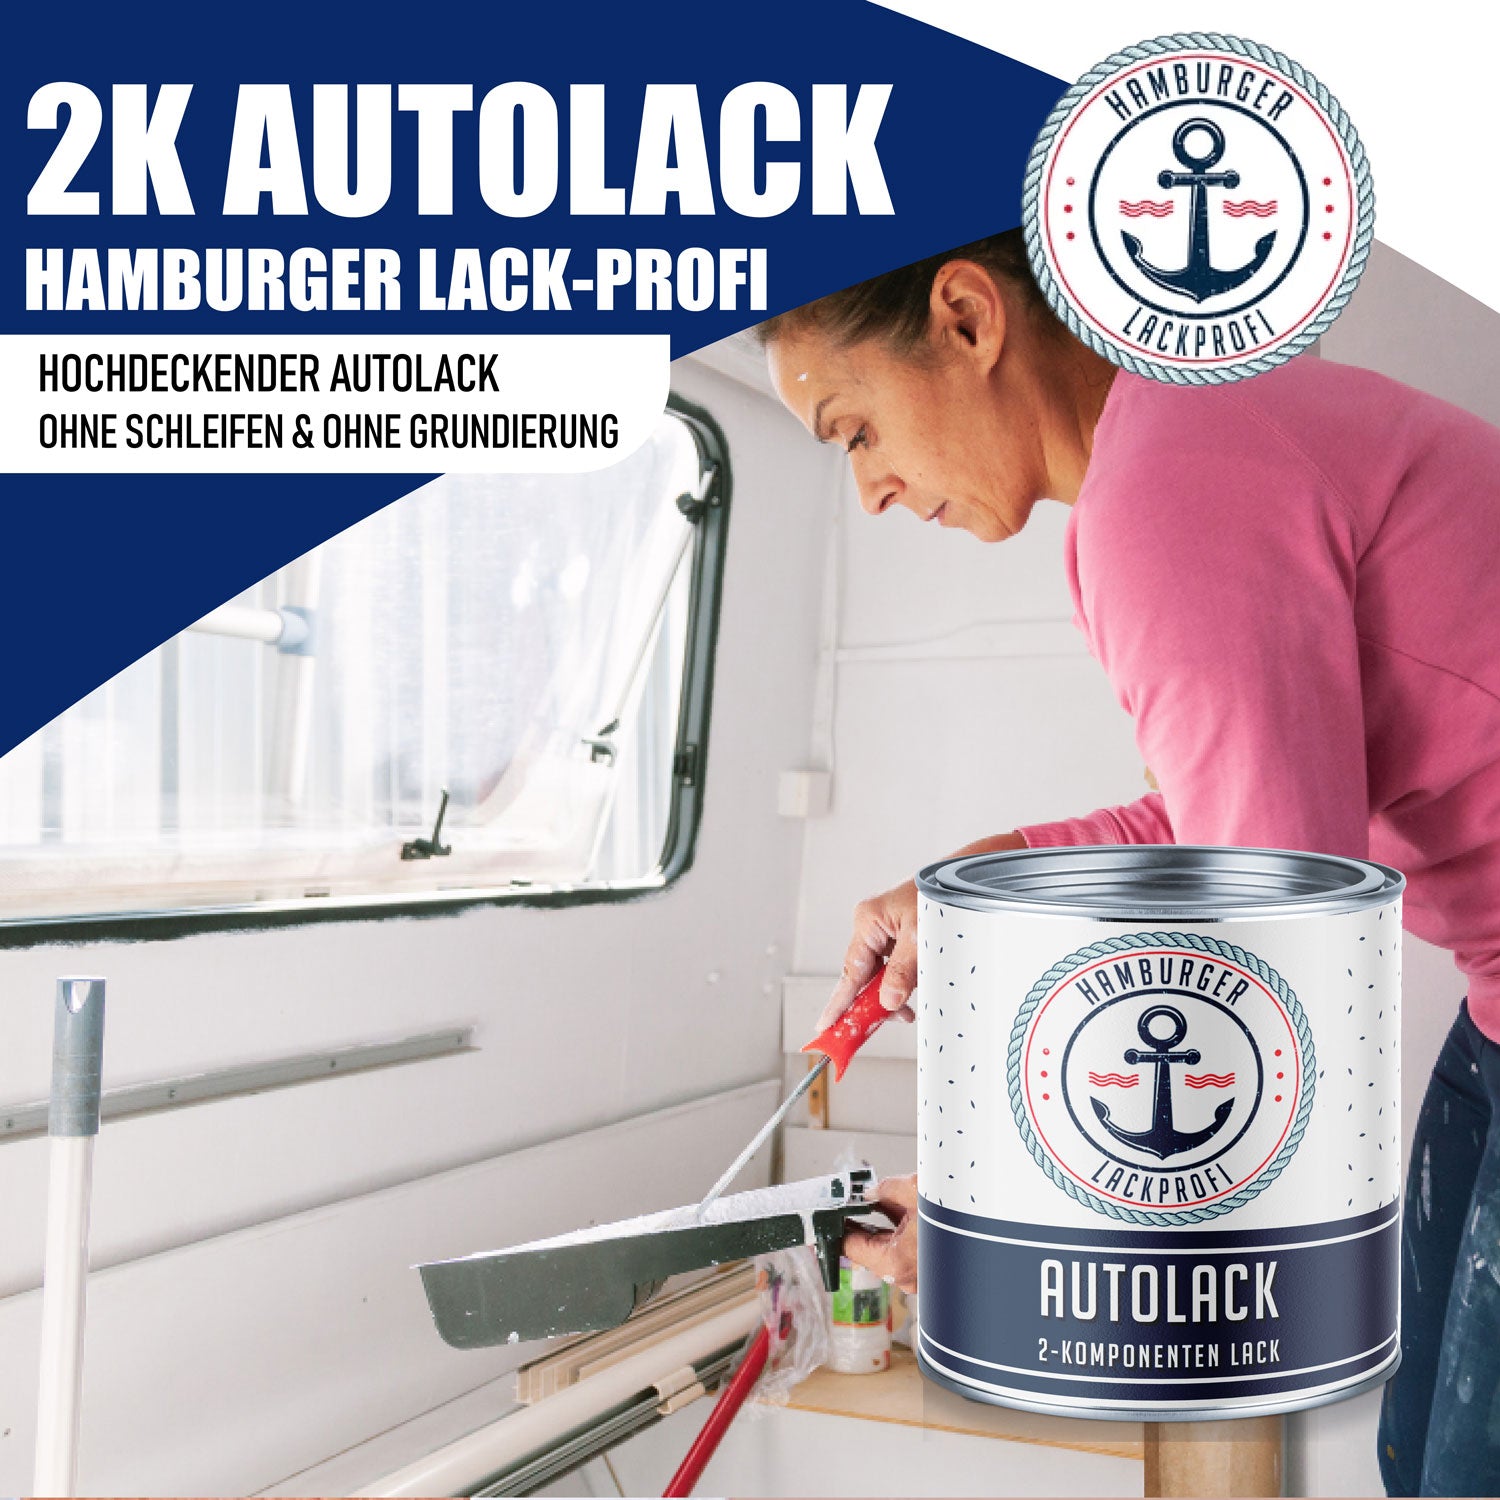 Hamburger Lack-Profi 2K Autolack in Betongrau RAL 7023 mit Lackierset (X300) & Verdünnung (1 L) - 30% Sparangebot